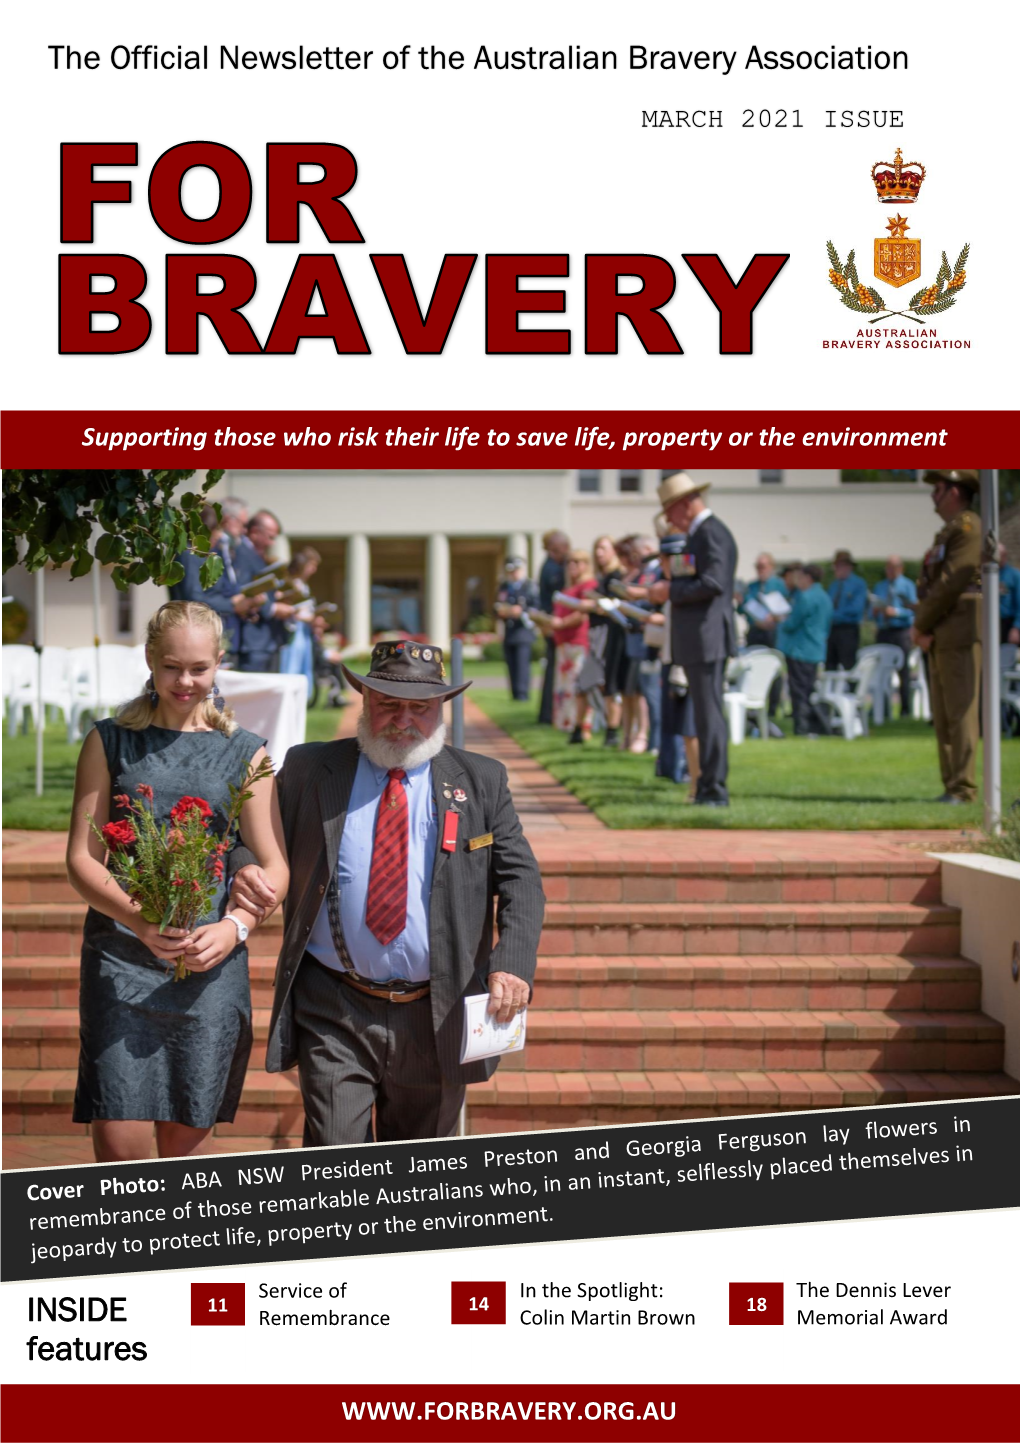 The Official Newsletter of the Australian Bravery Association